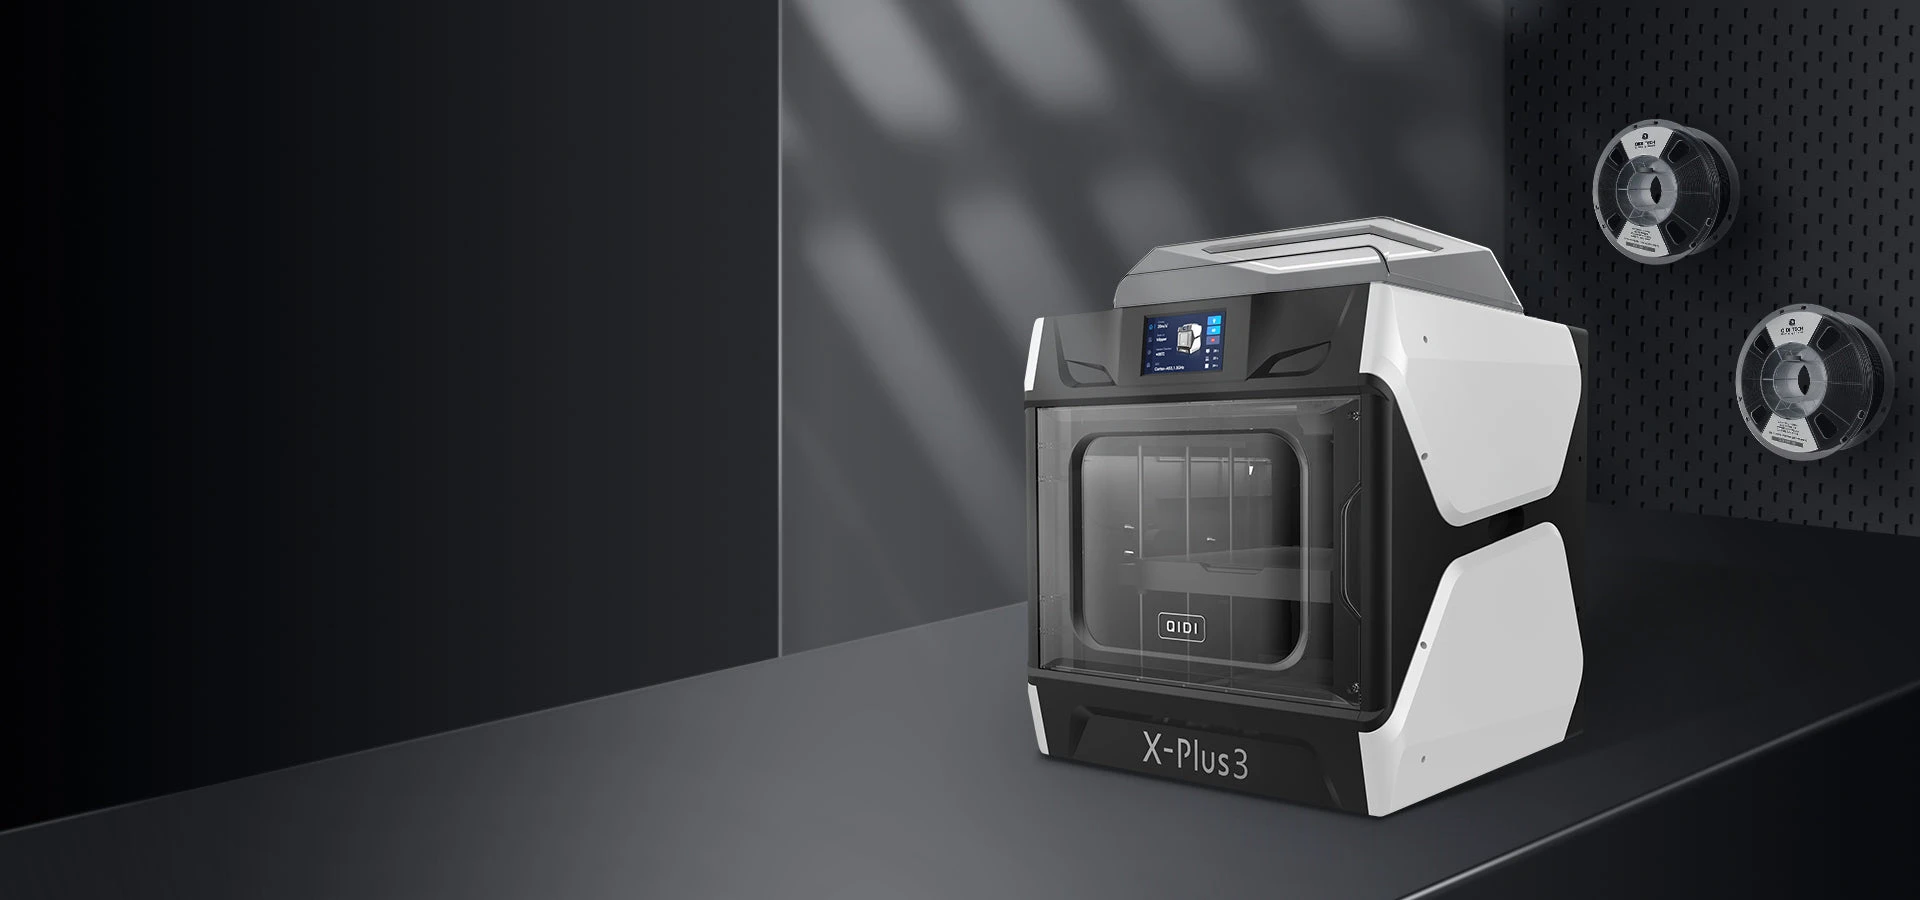 QIDI TECH X-Plus 3 3D Printer, Auto Levelling, 600mm/s Printing Speed, Flexible HF Board, Chamber Circulation Fan, Filament Detection, Dryer Box, 280*280*270mm